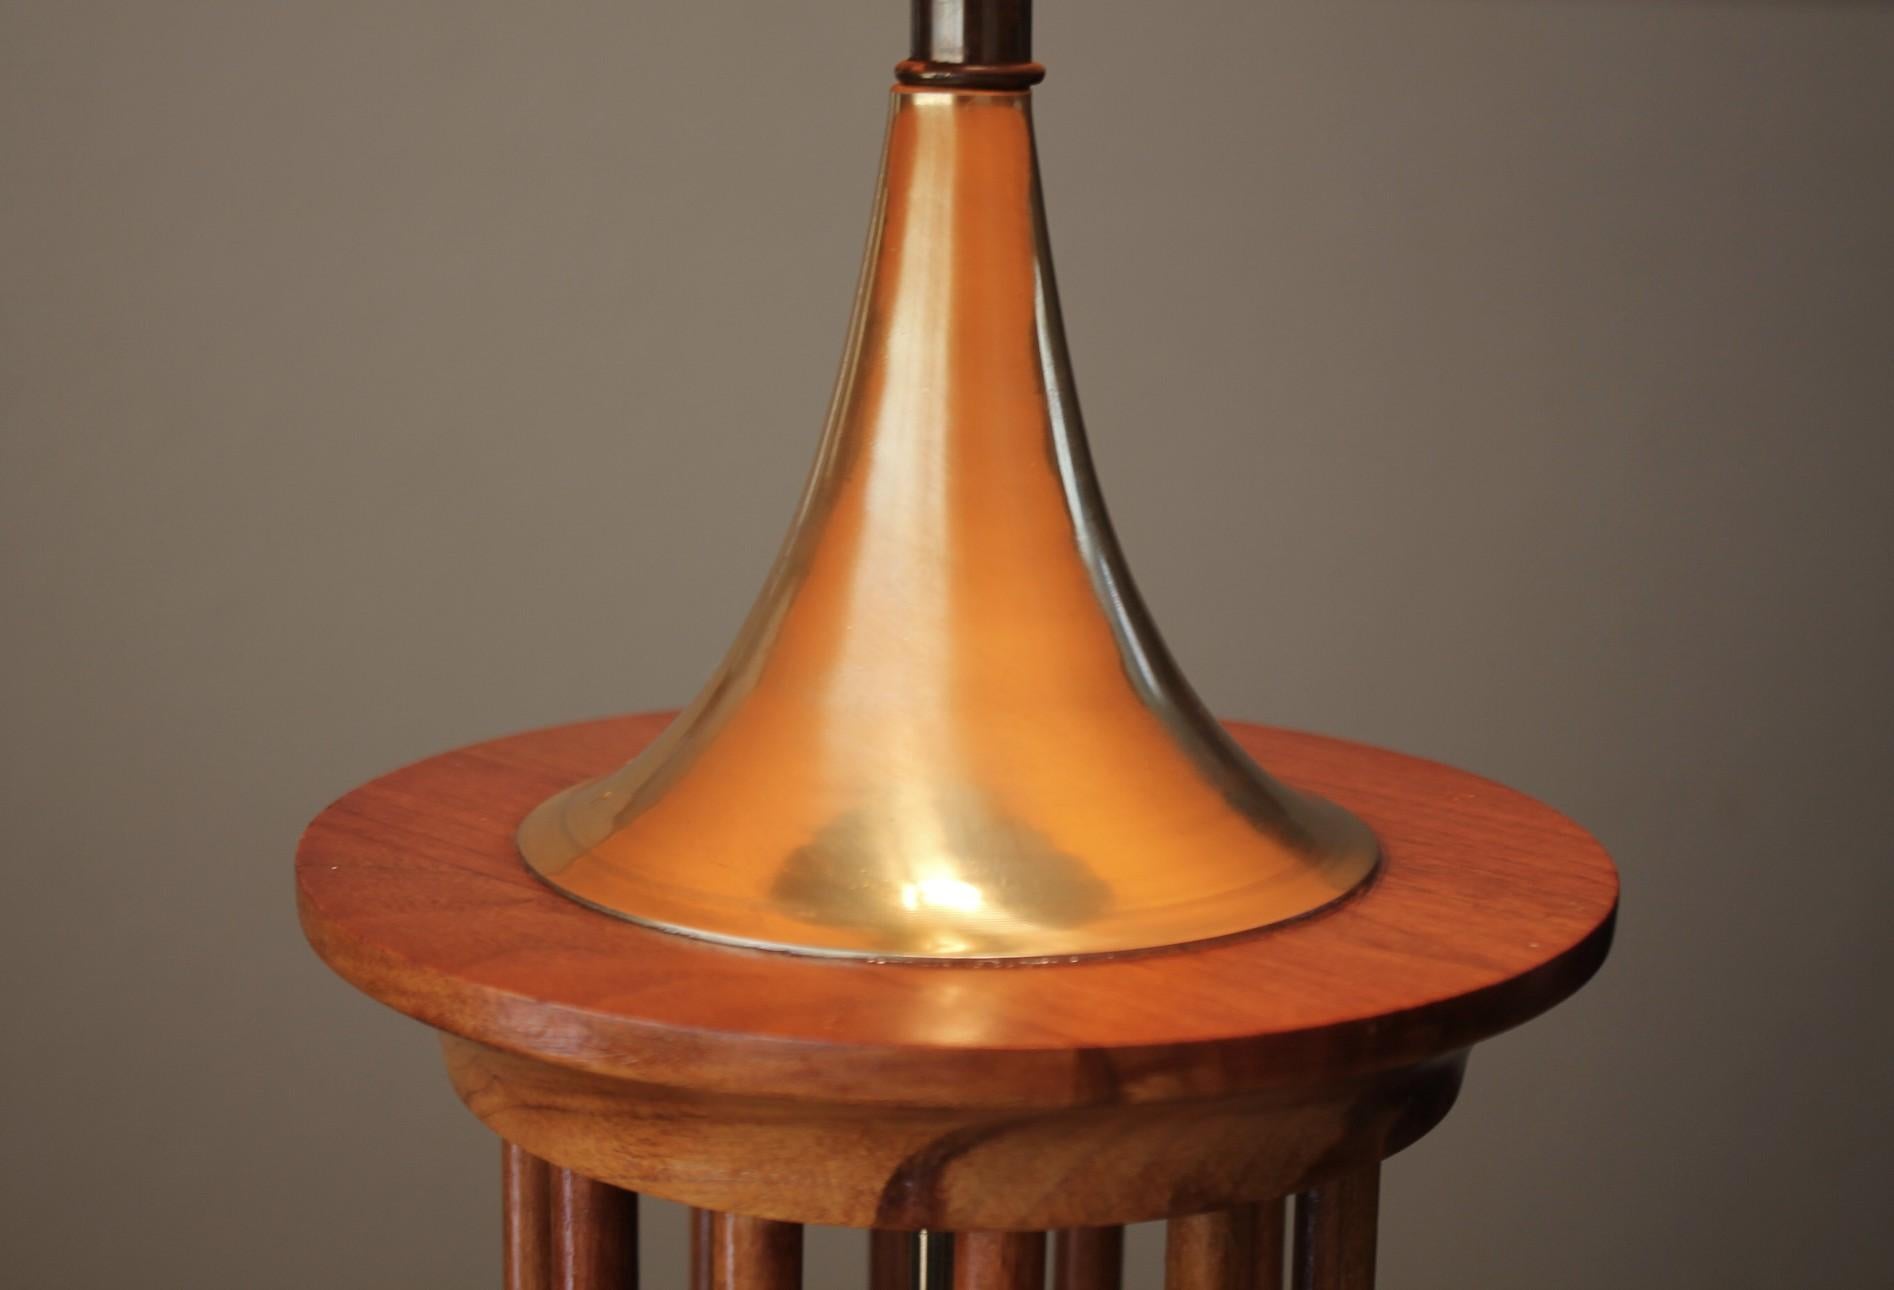 Hand-Carved Glorious MId Century Danish Modern Modeline Teak Table Lamp 1950s Art Sculpture For Sale